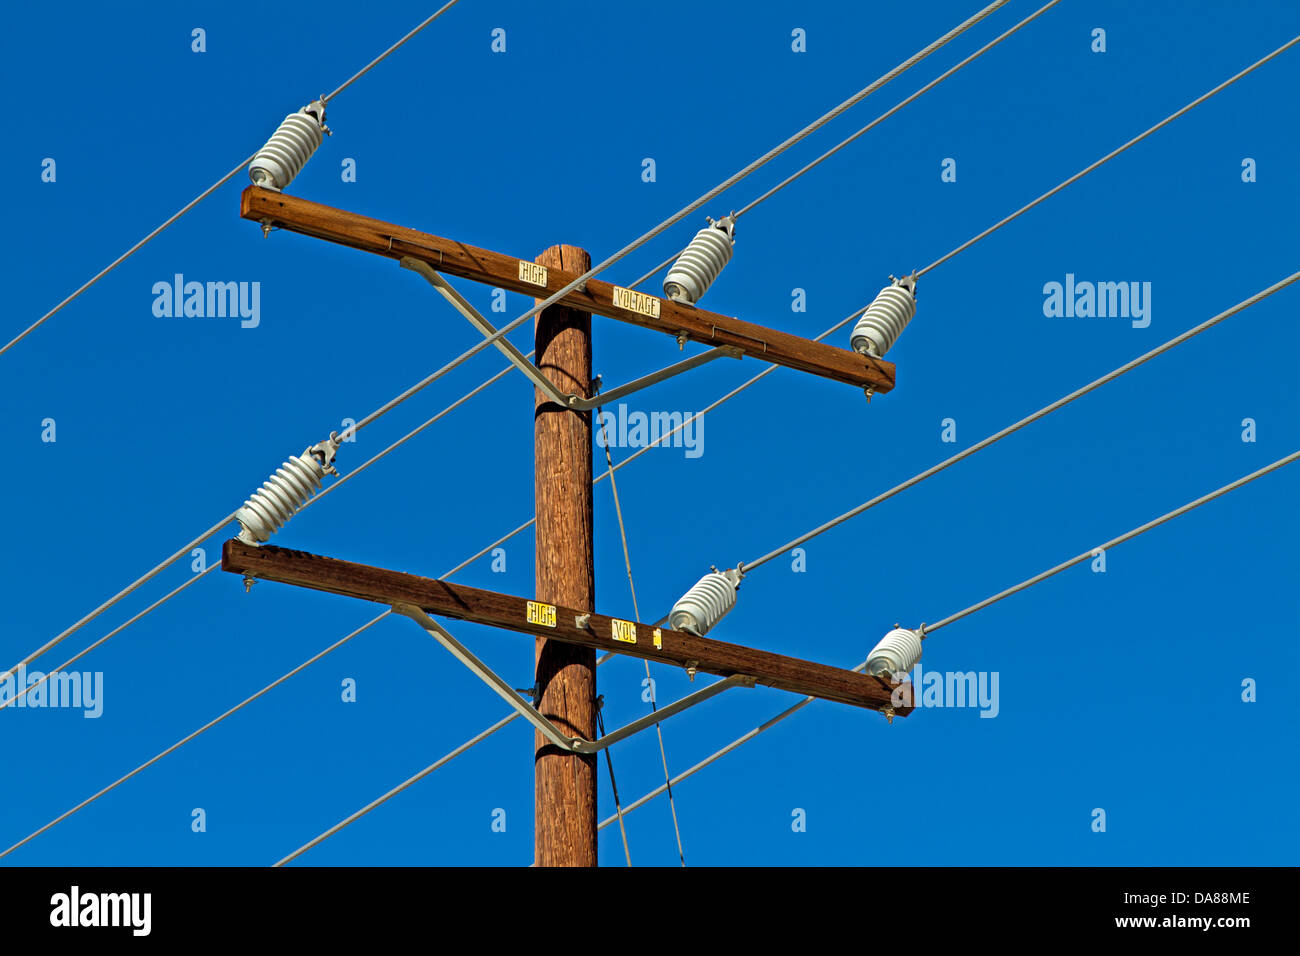 Electricity pylon with blue sky Stock Photo